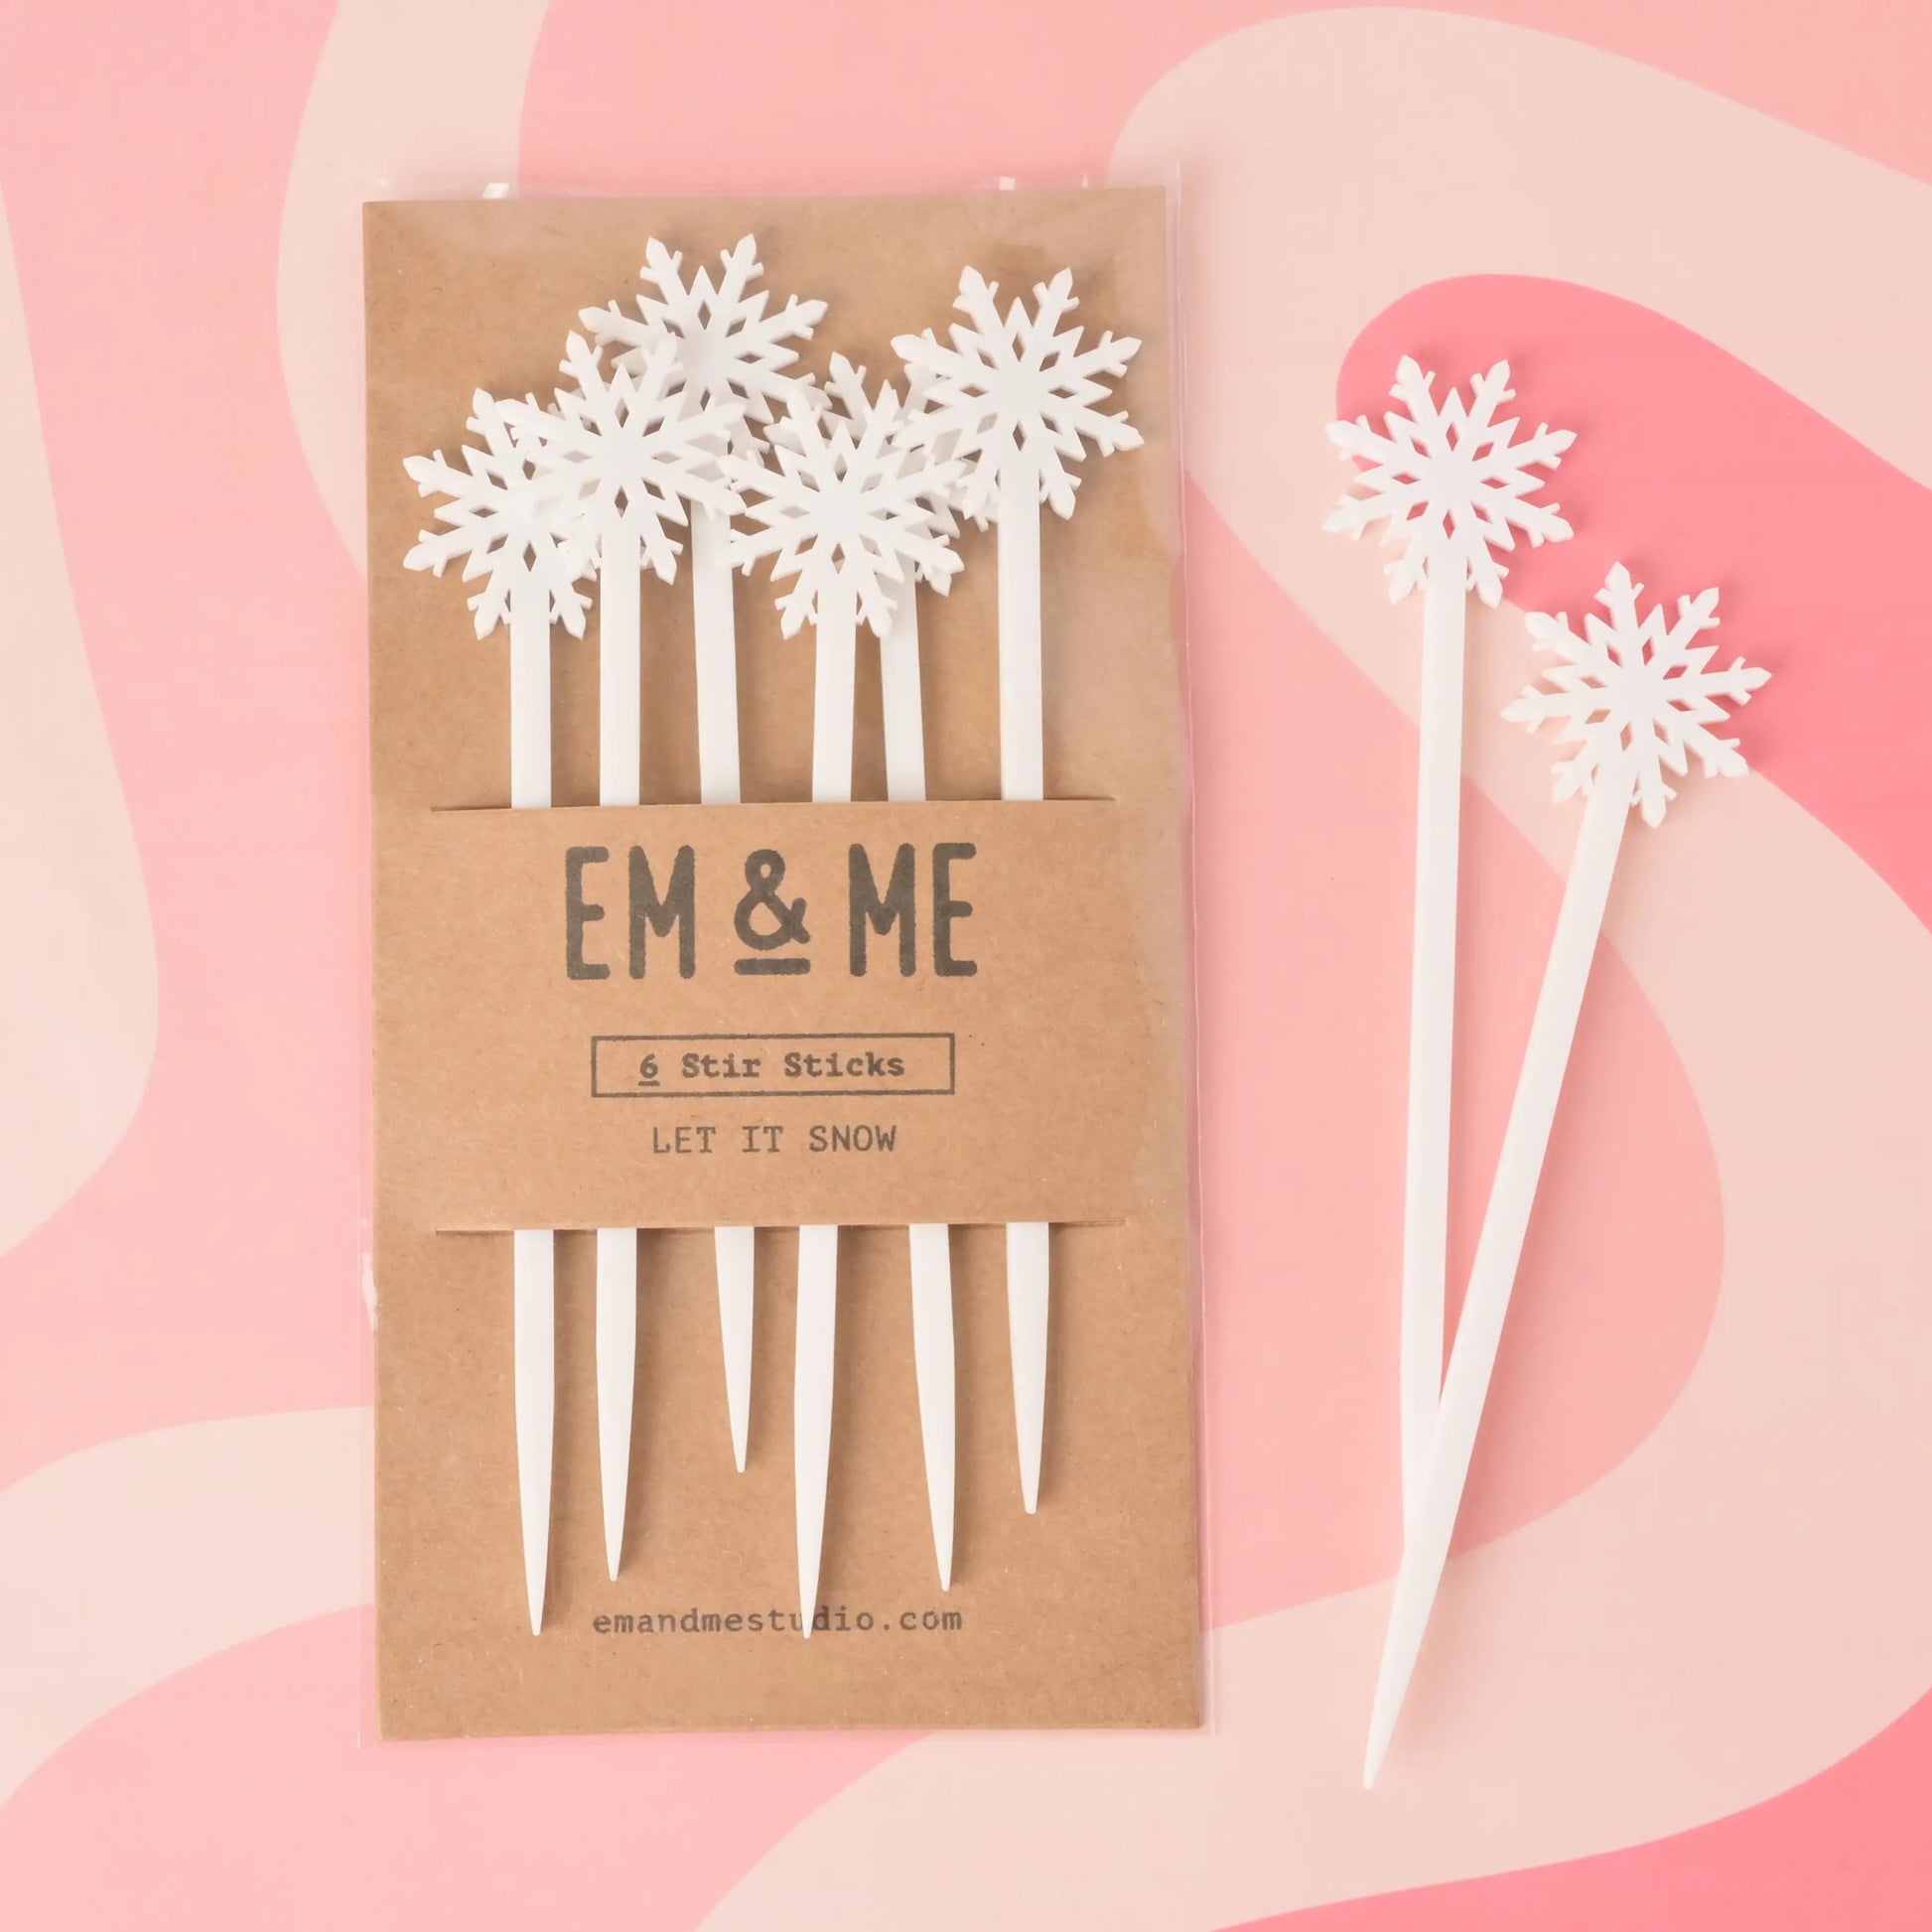 Snowflake Beverage Stir Sticks (Set of 6) – Neighborly